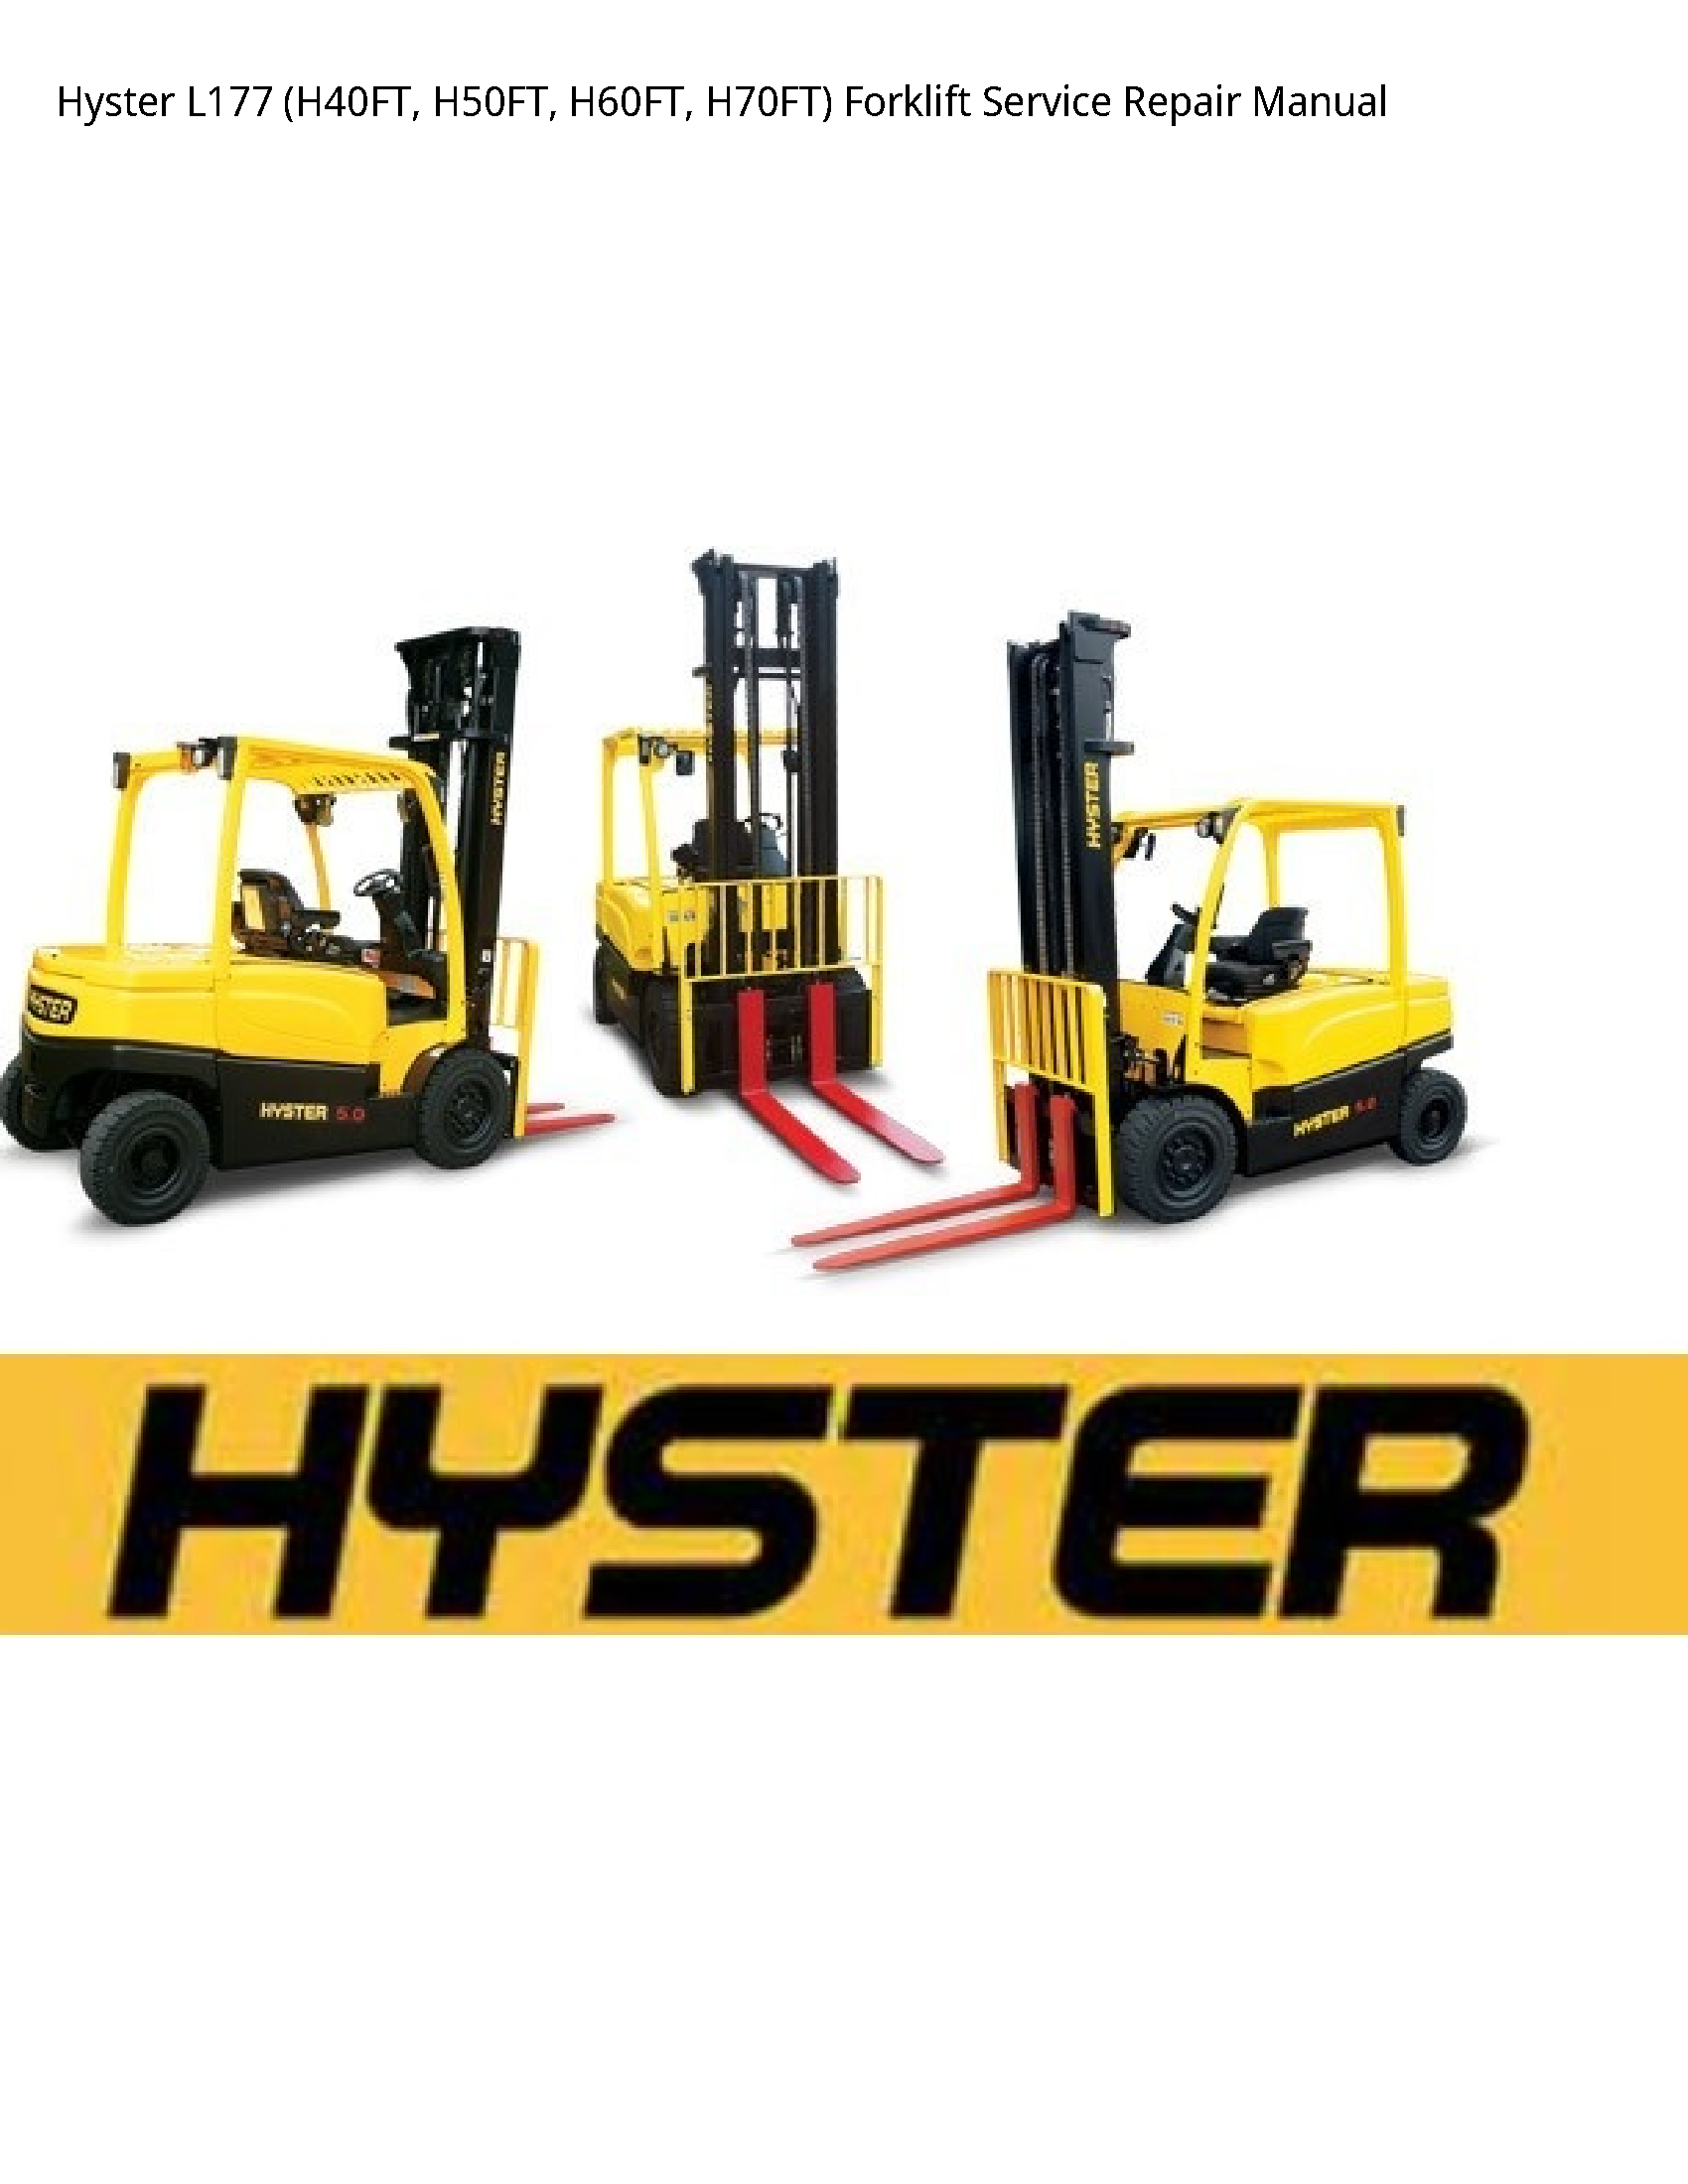 Hyster L177 Forklift manual